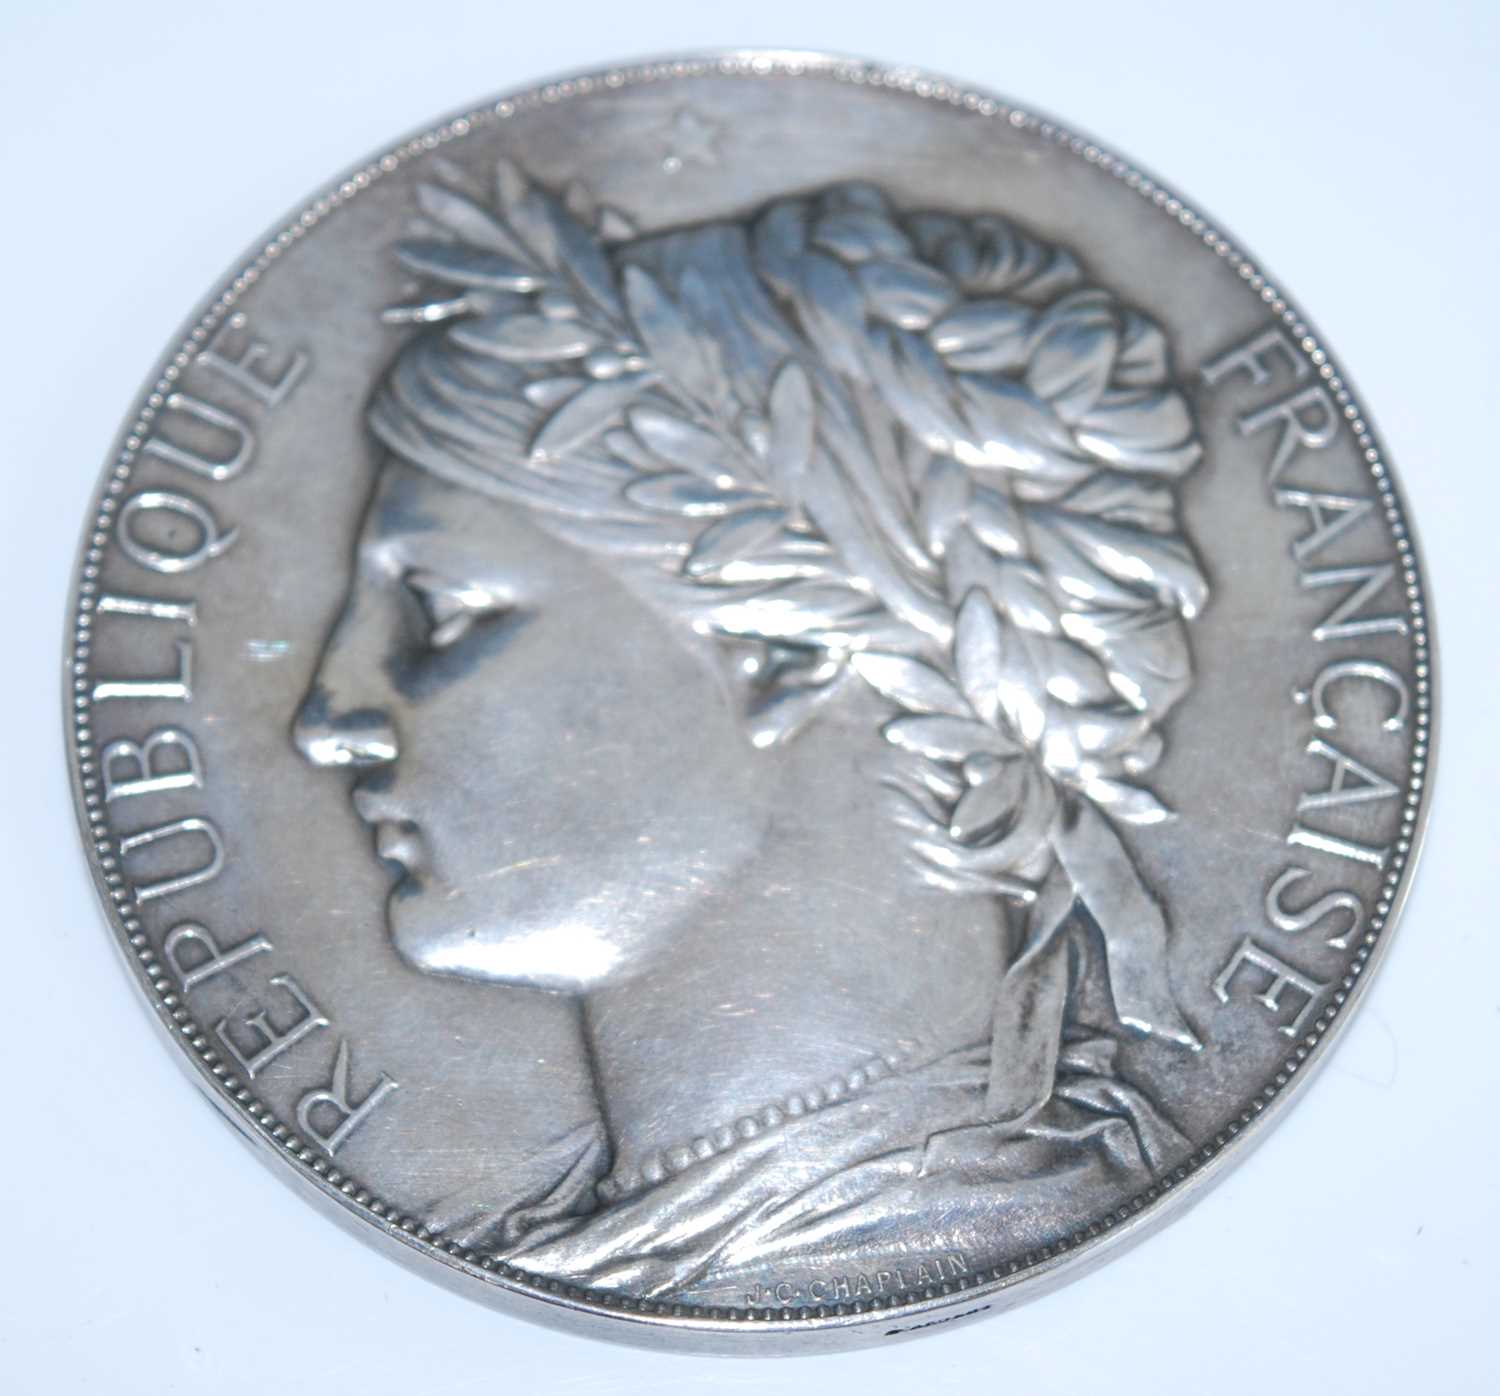 France, Exposition Universelle Internationale de Paris, 1878, Silver medal, by Jules-Clement - Image 2 of 3